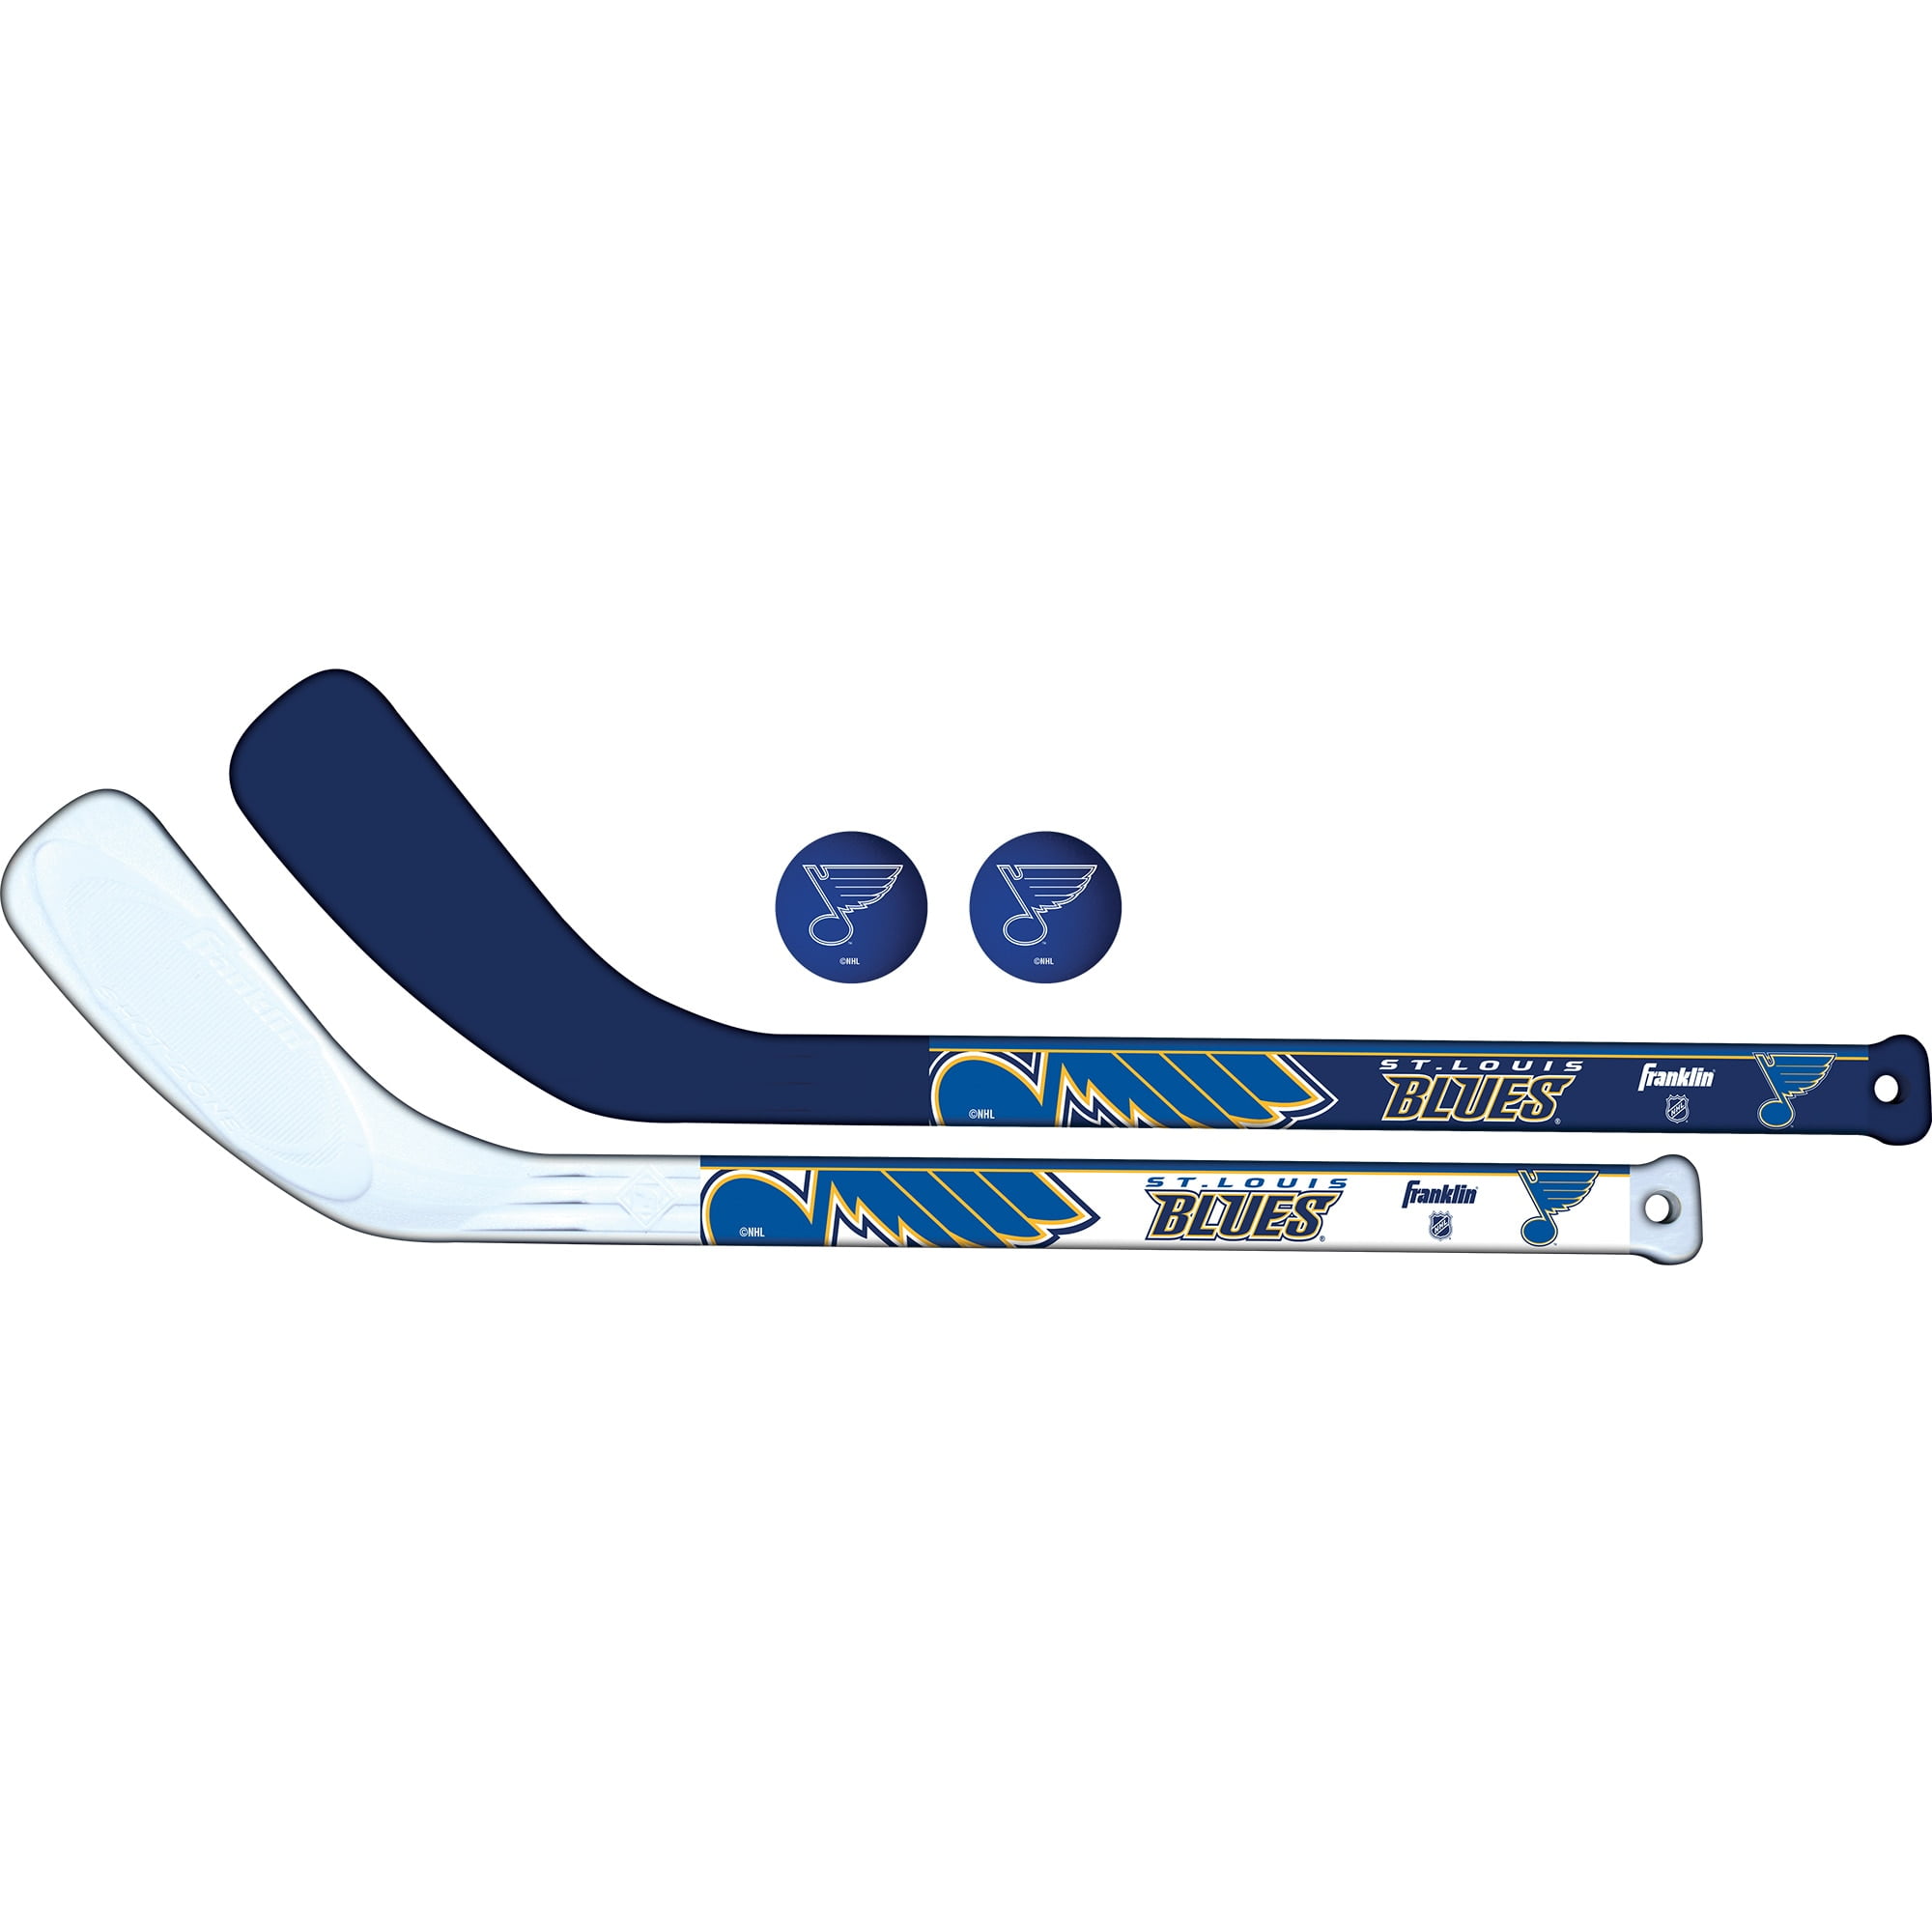 NHL player mini hockey stick with the St. Louis Blues team logo